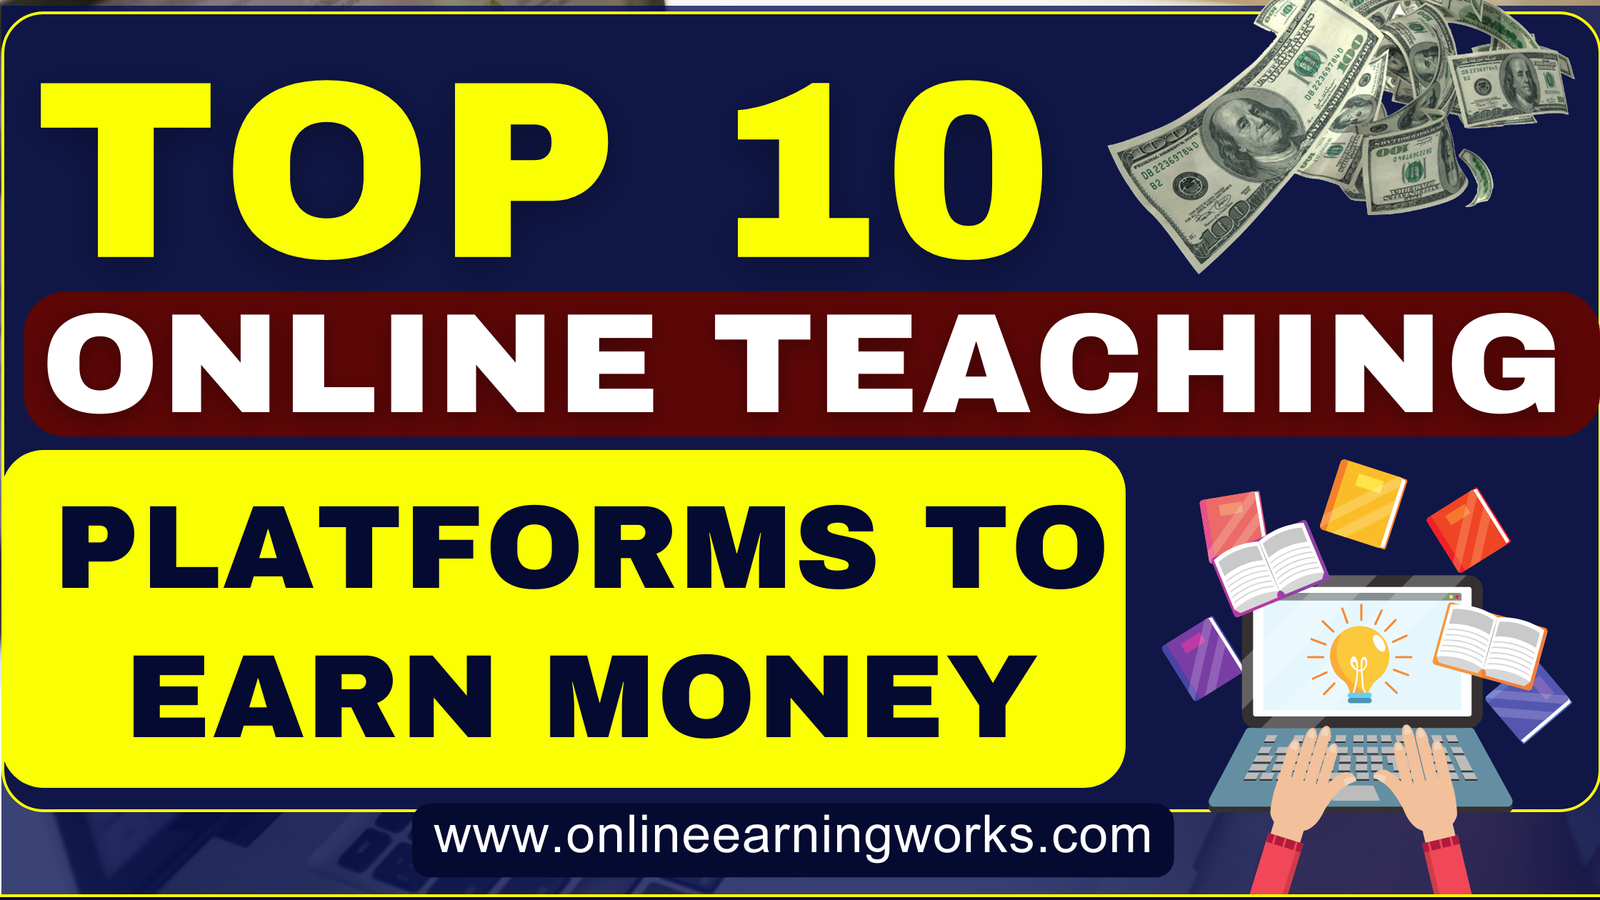 Top 10 Online Teaching Platforms to Earn Money